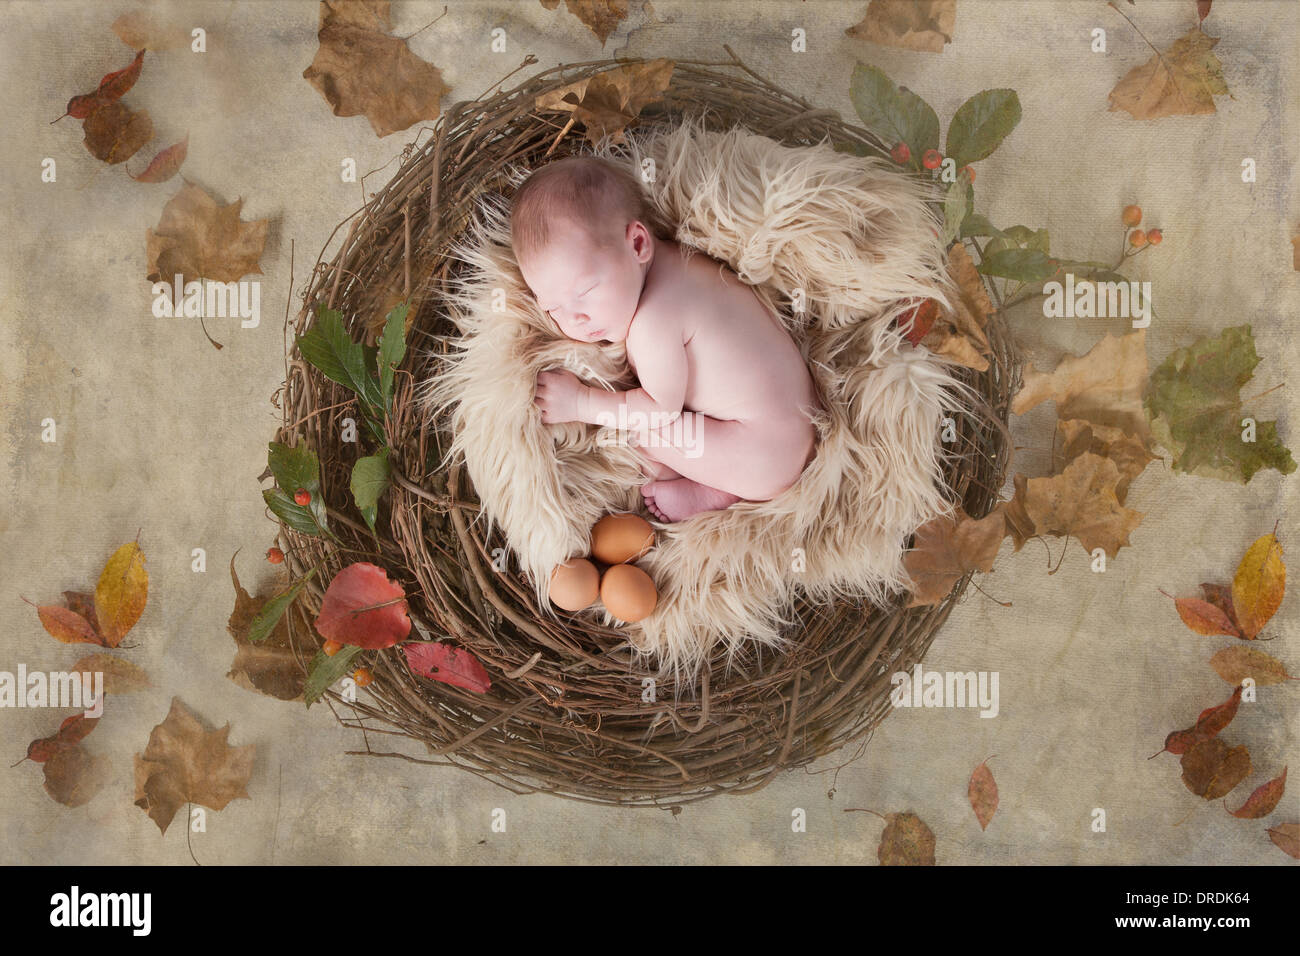 Three bird eggs in the nest Stock Photo by ©borjomi88 170275320